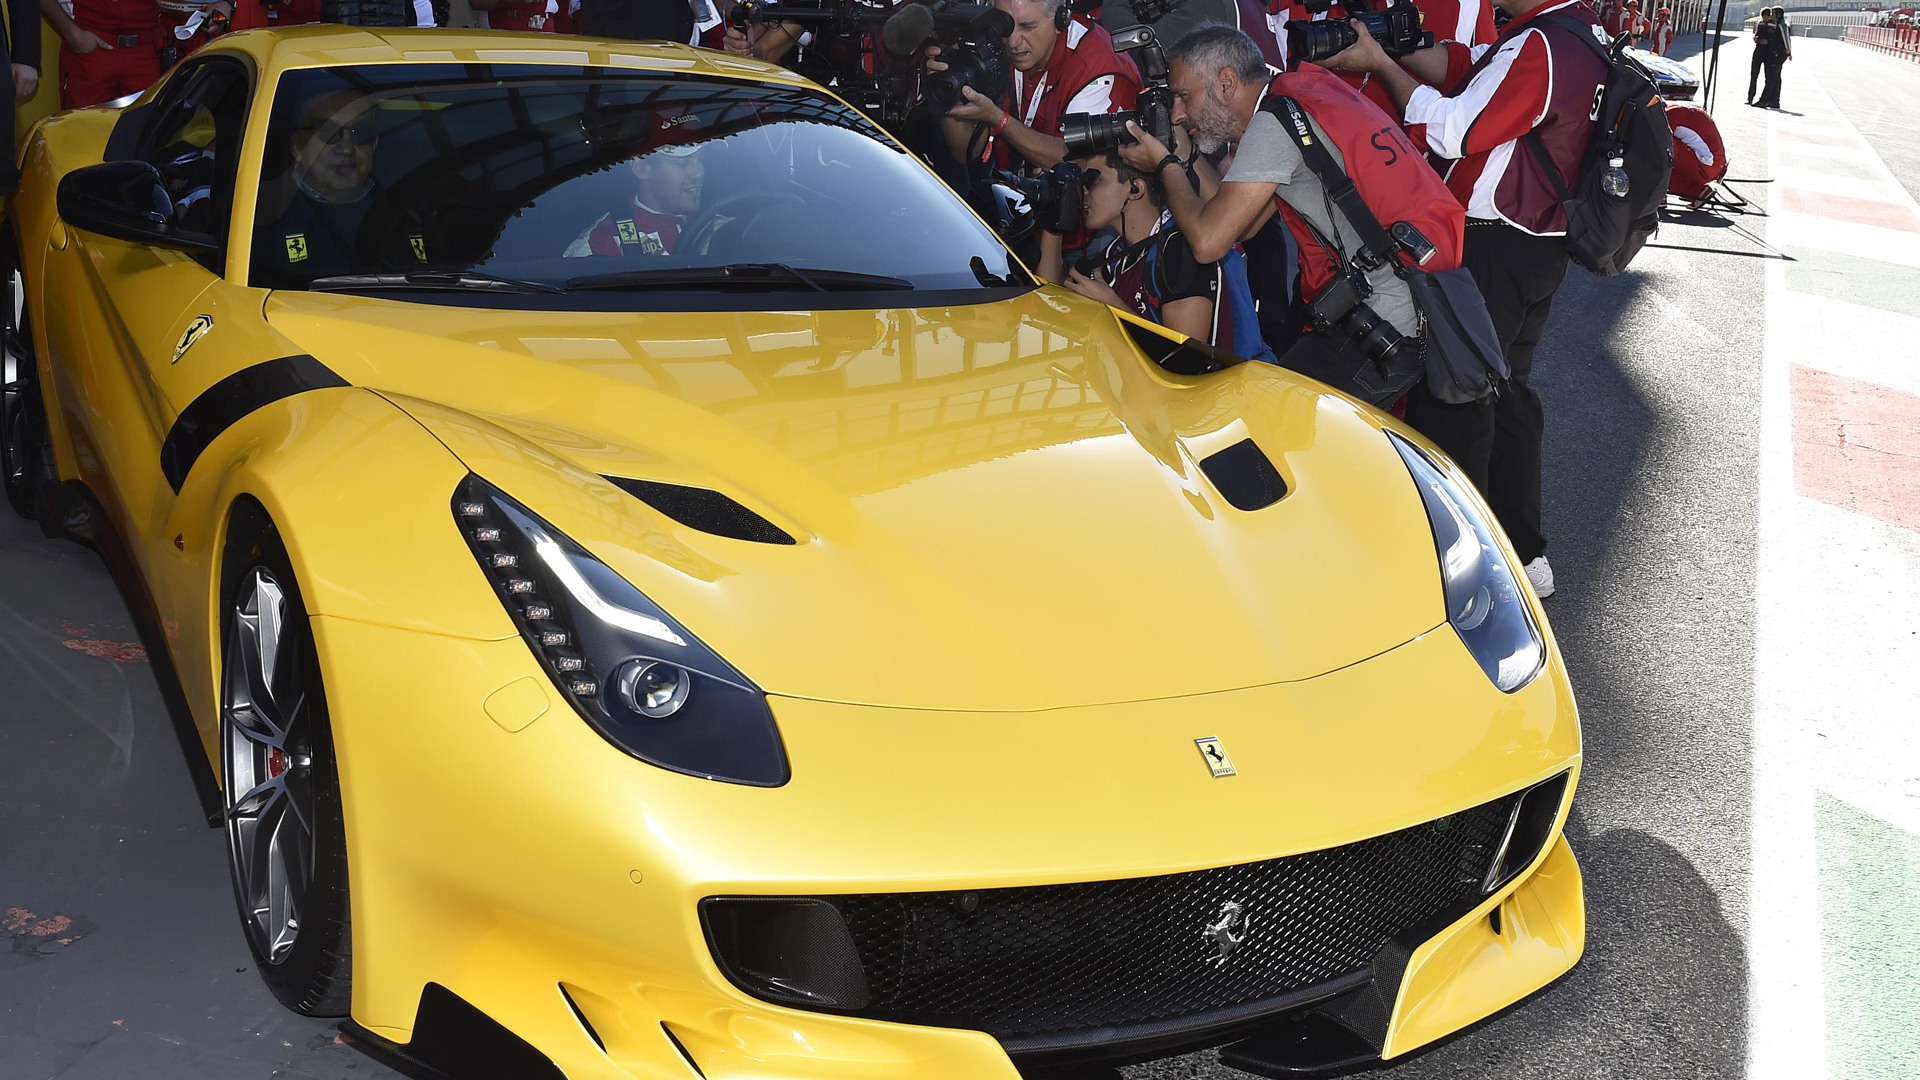 Ferrari F12 tdf, 2015 Finali Mondiali